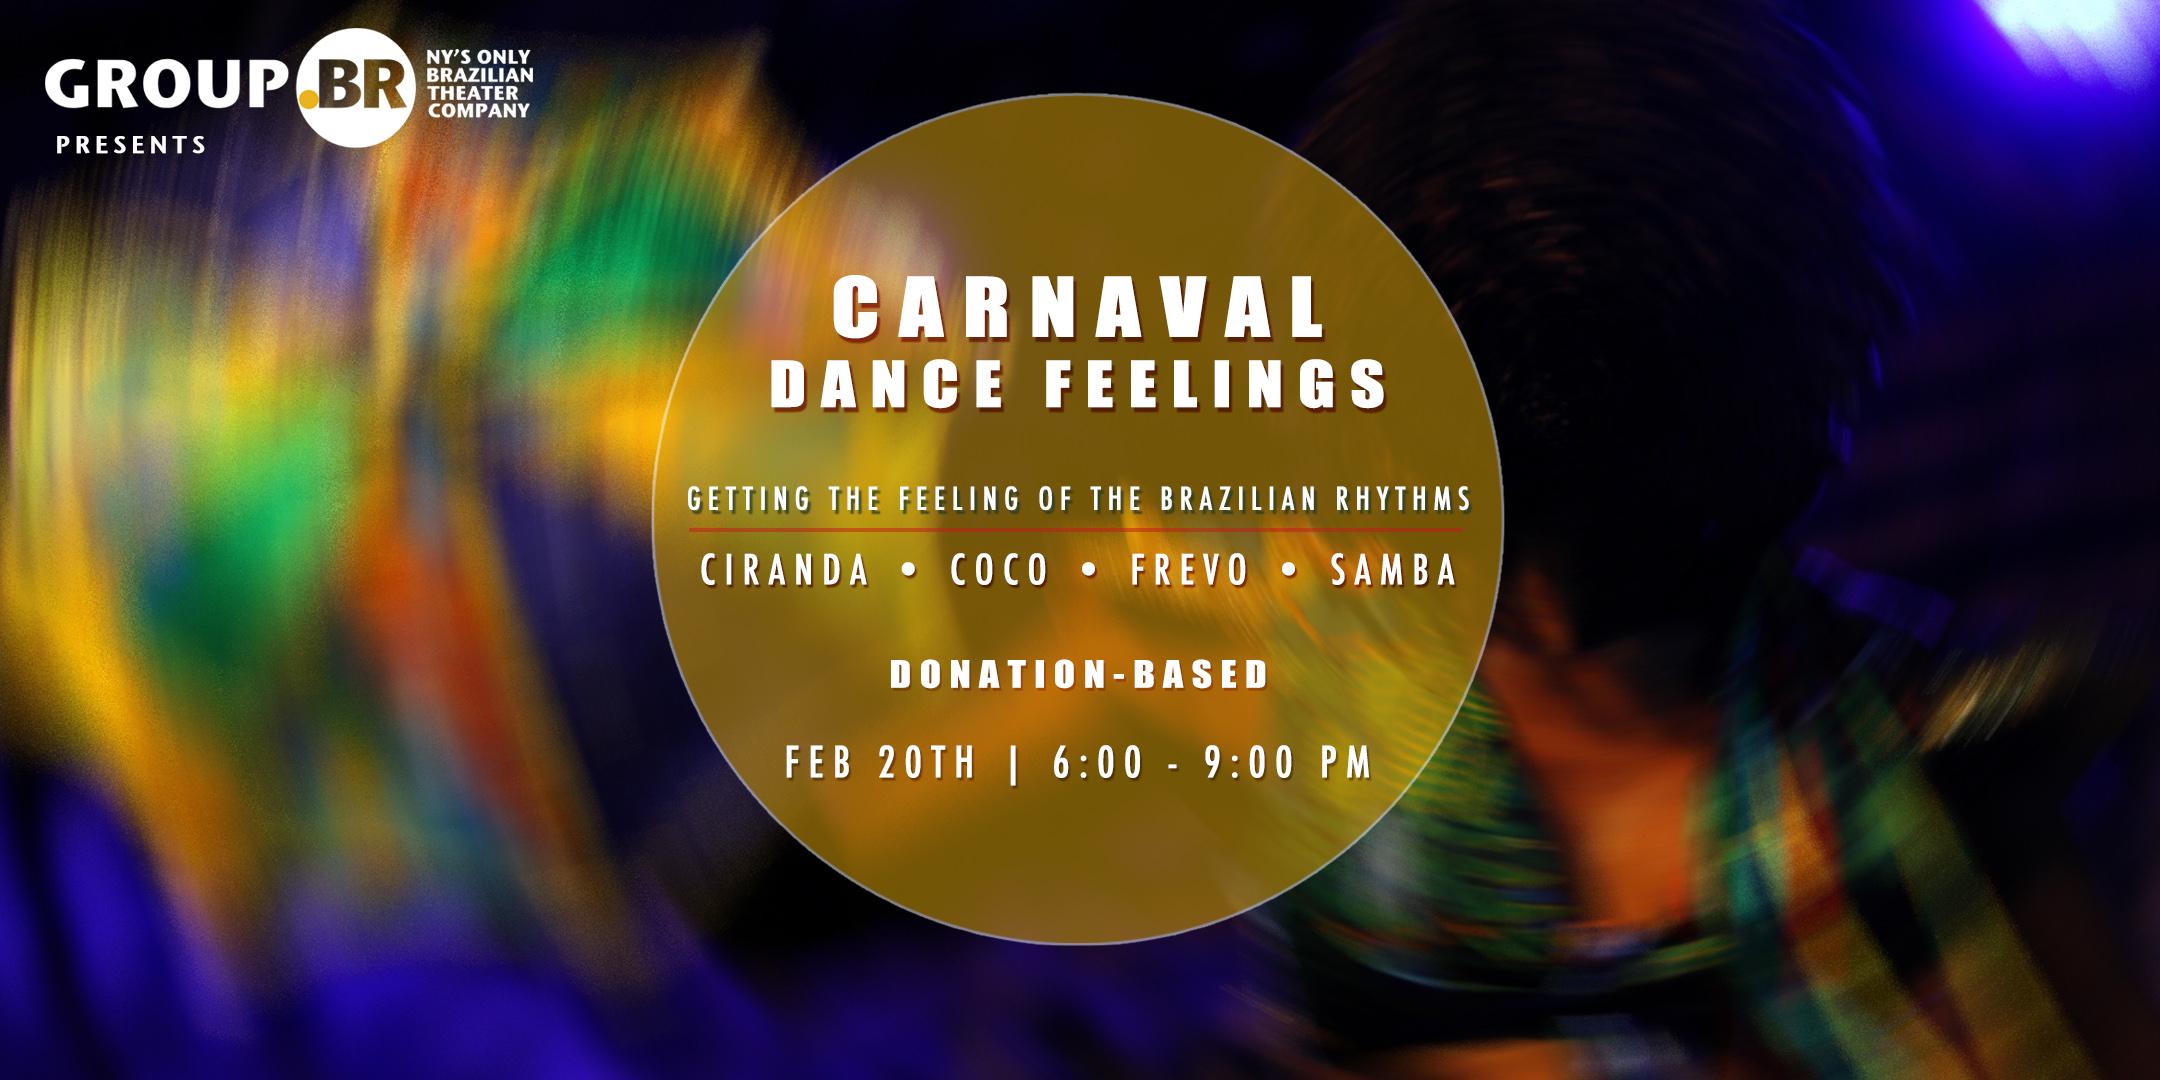 Carnaval Dance Feelings